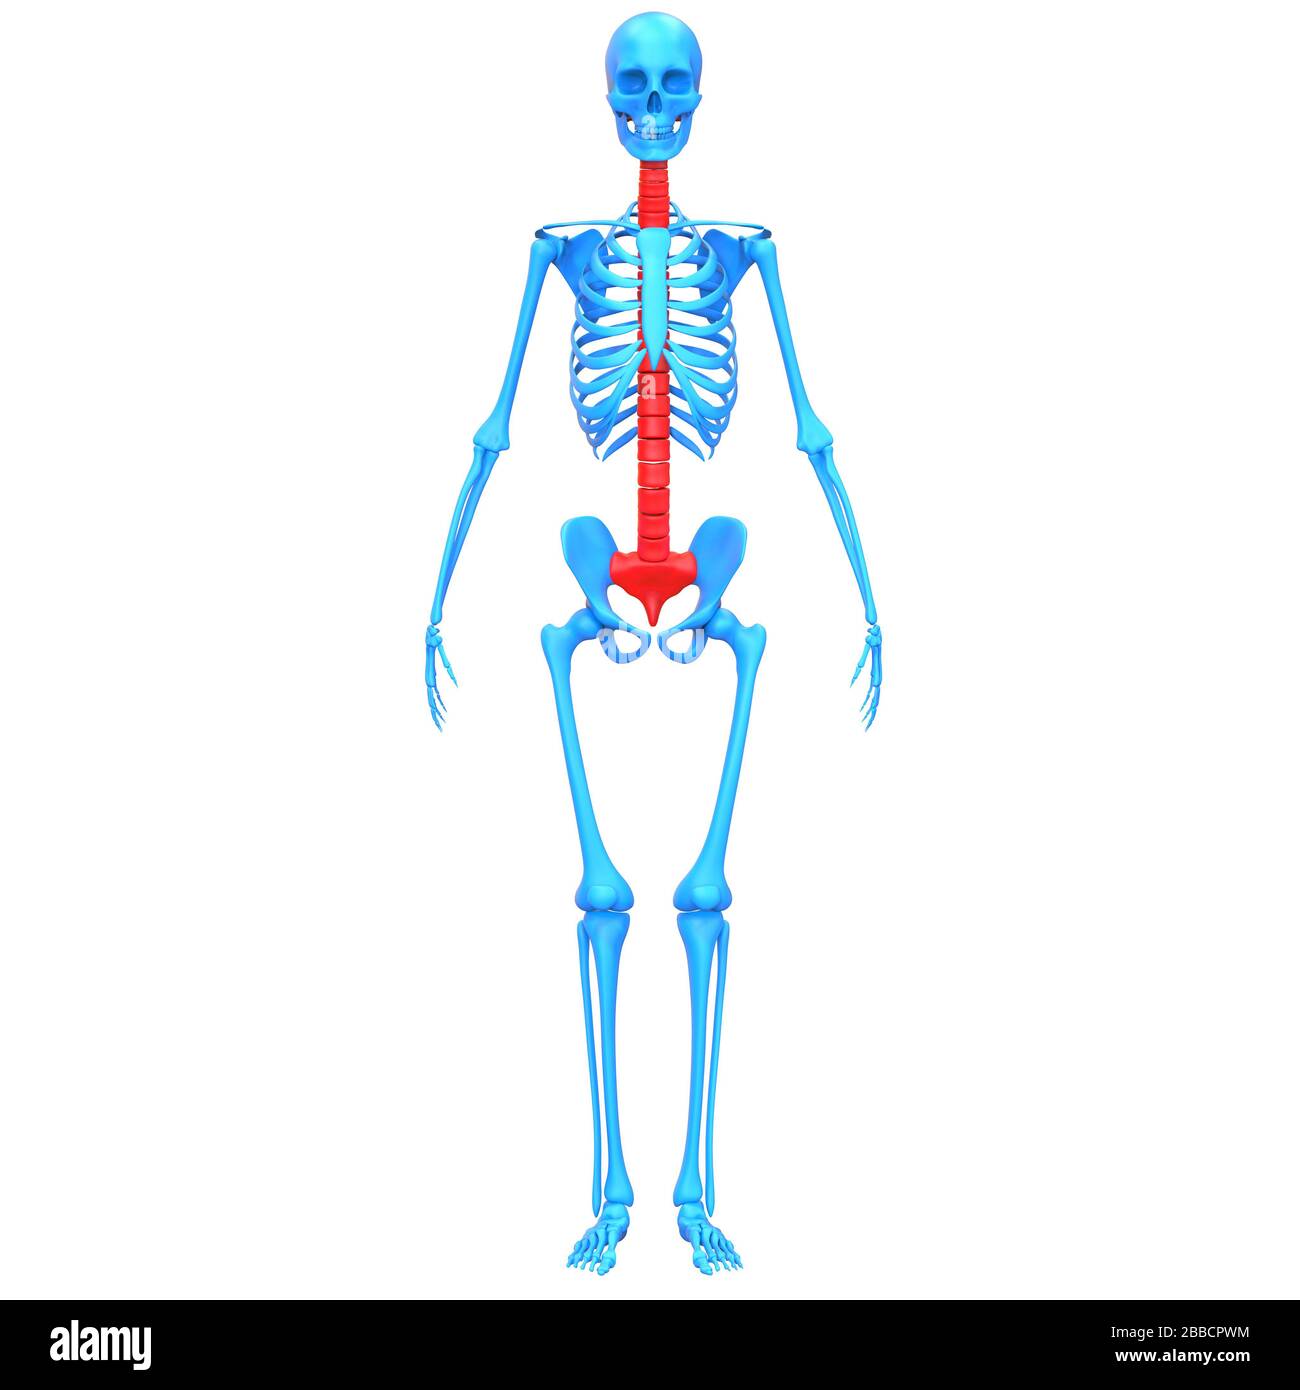 Vertebral Column of Human Skeleton System Anatomy Stock Photo